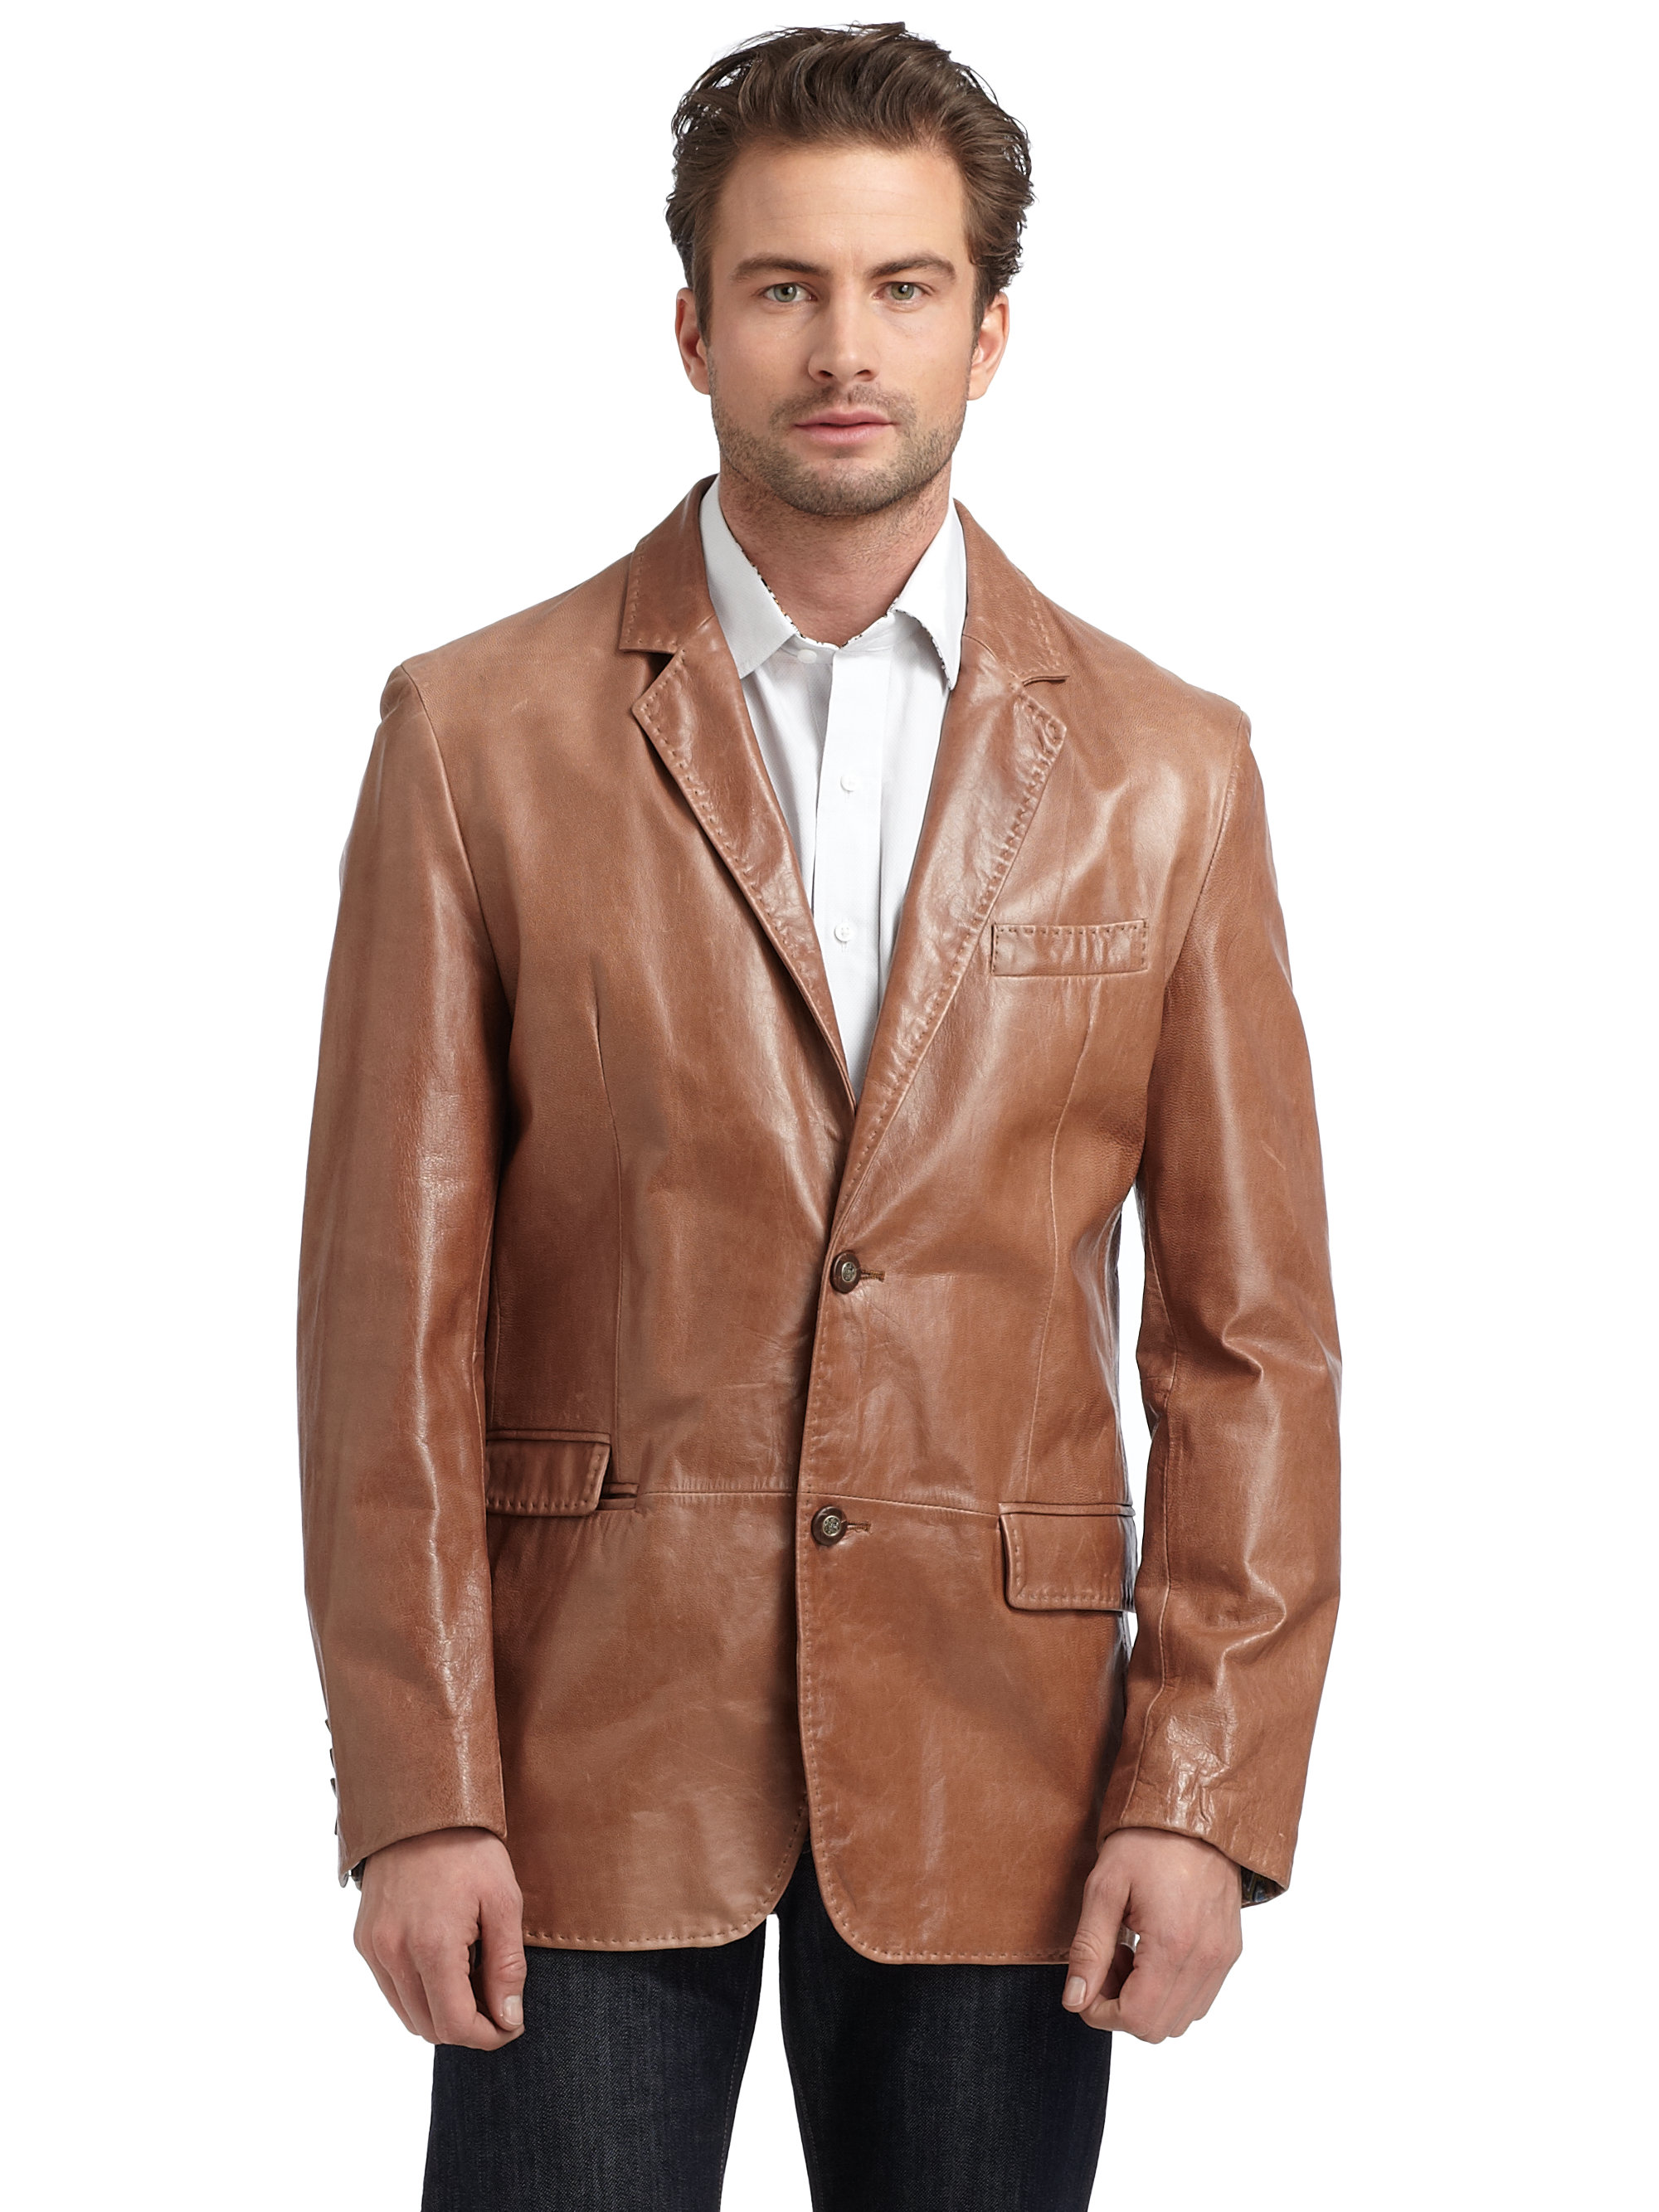 Lyst - Robert Graham Distressed Leather Blazer in Brown for Men